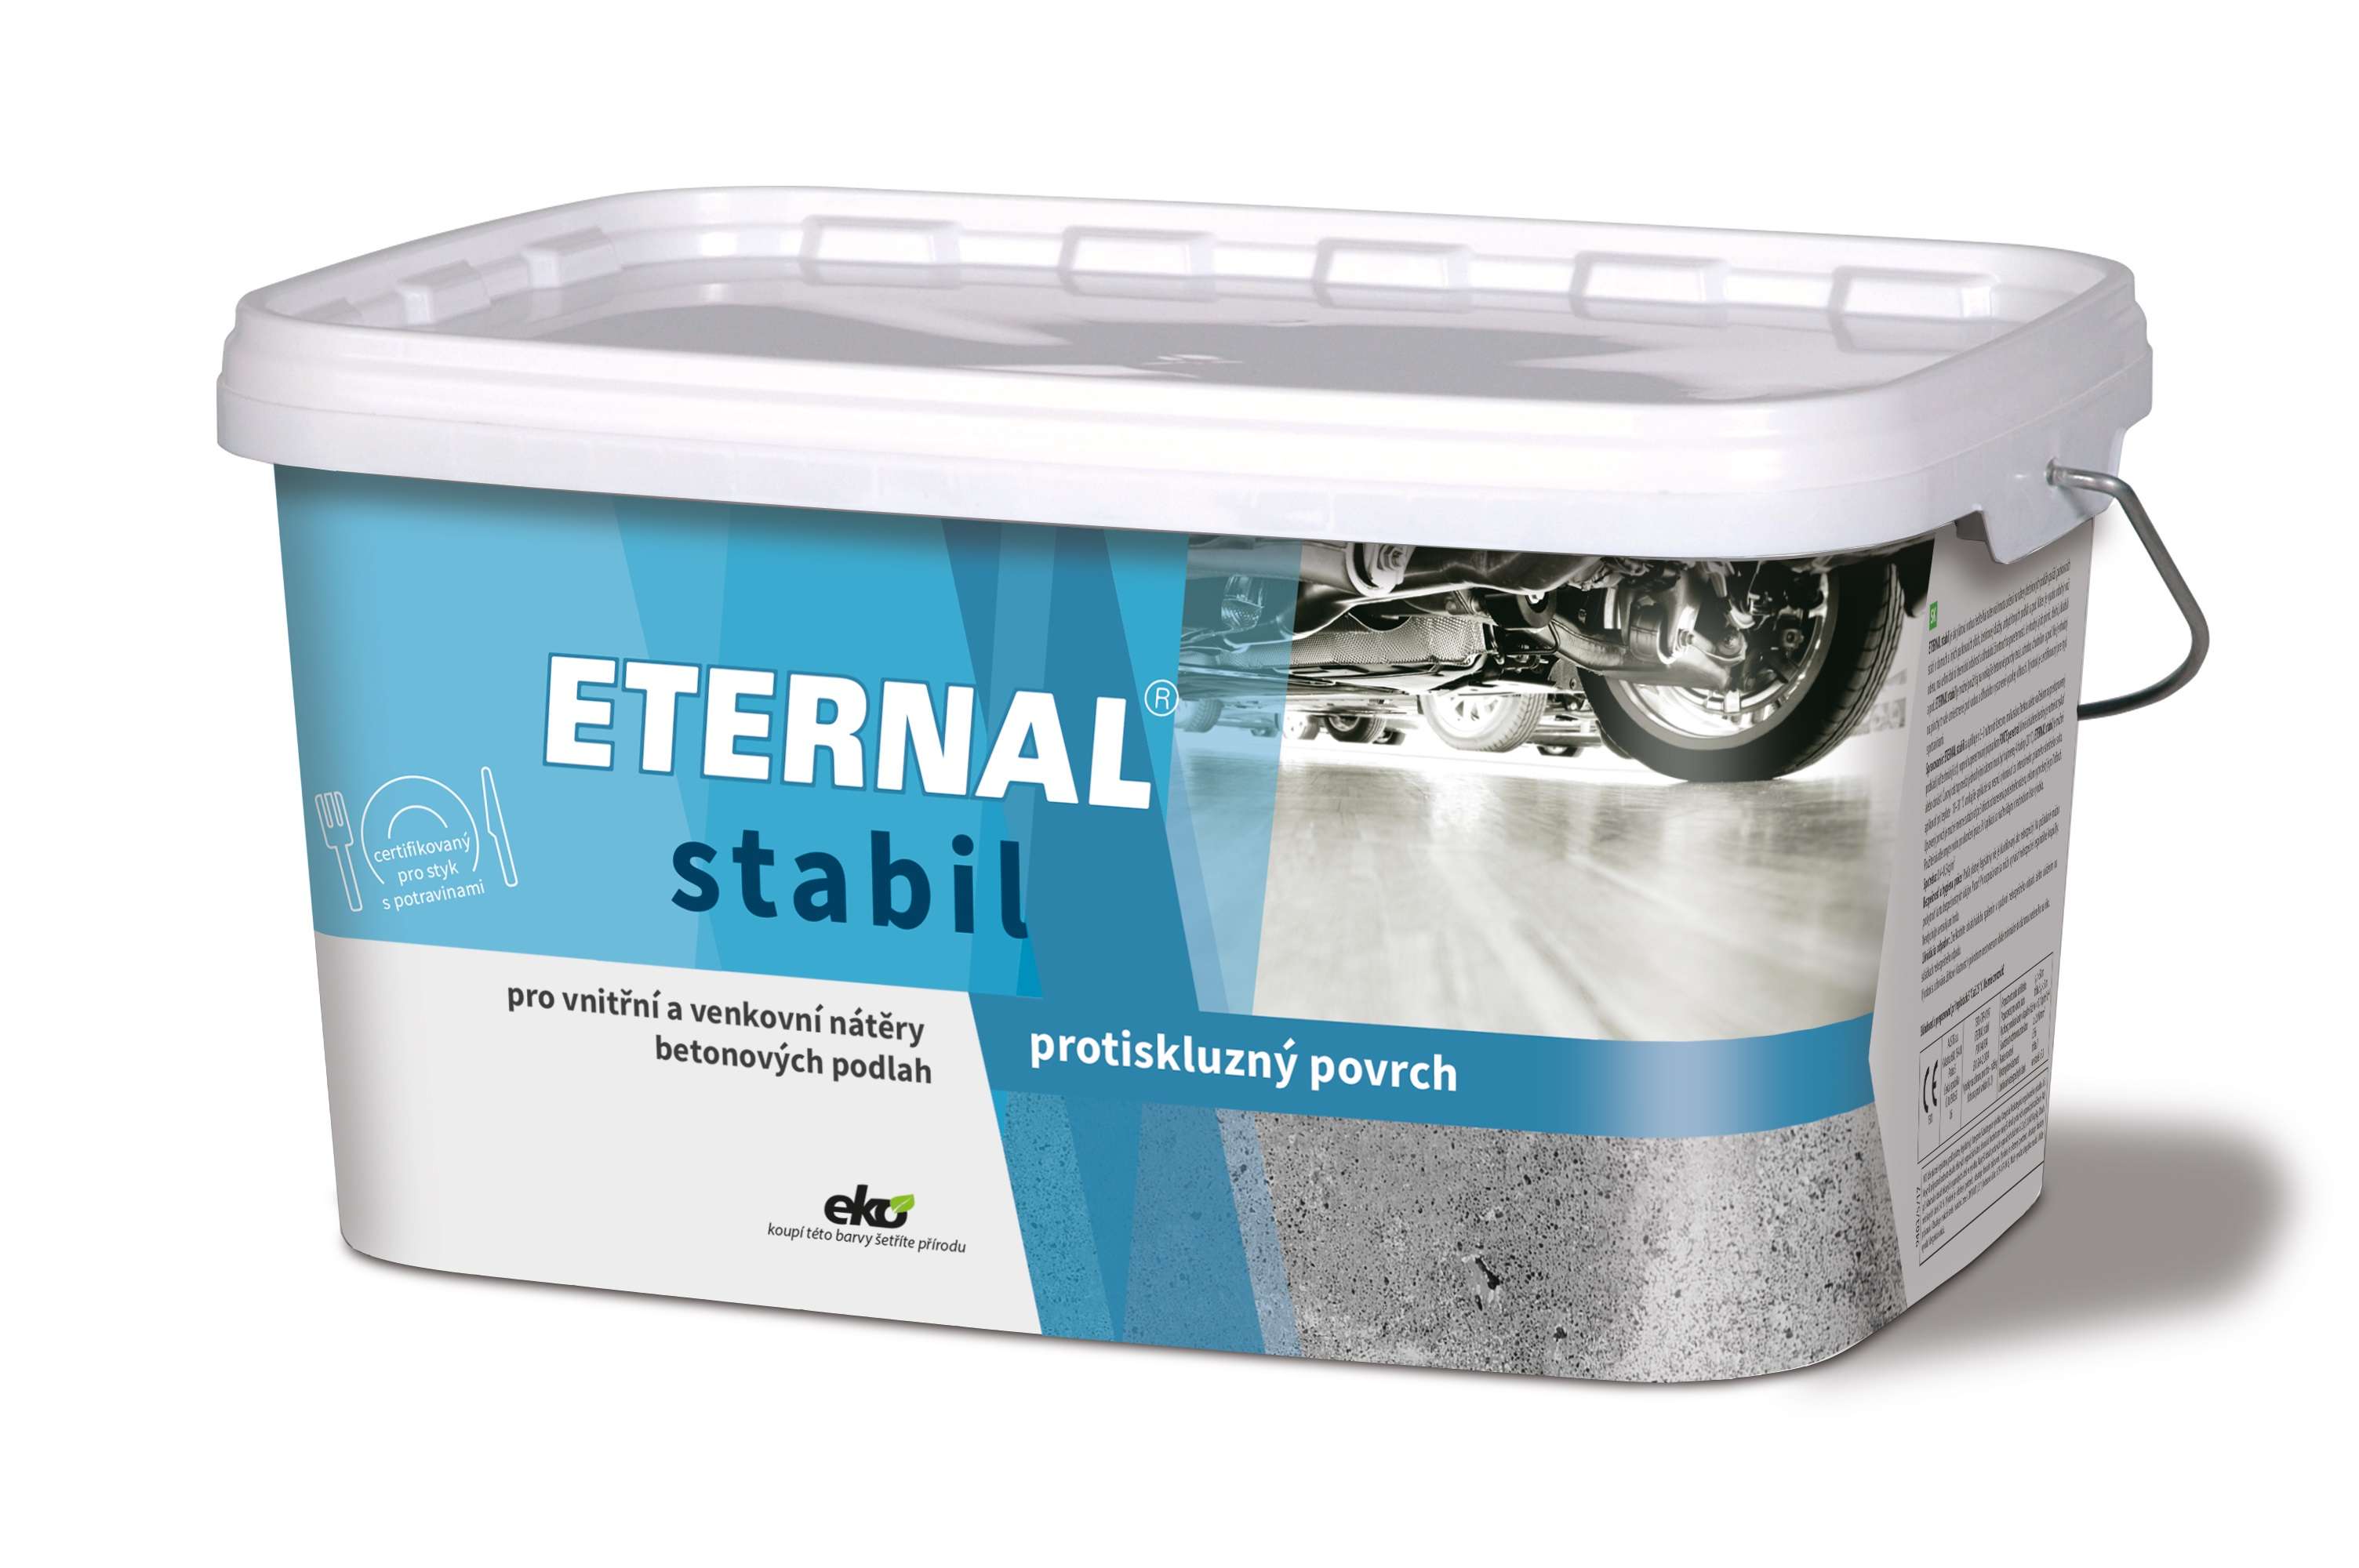 Eternal stabil 1